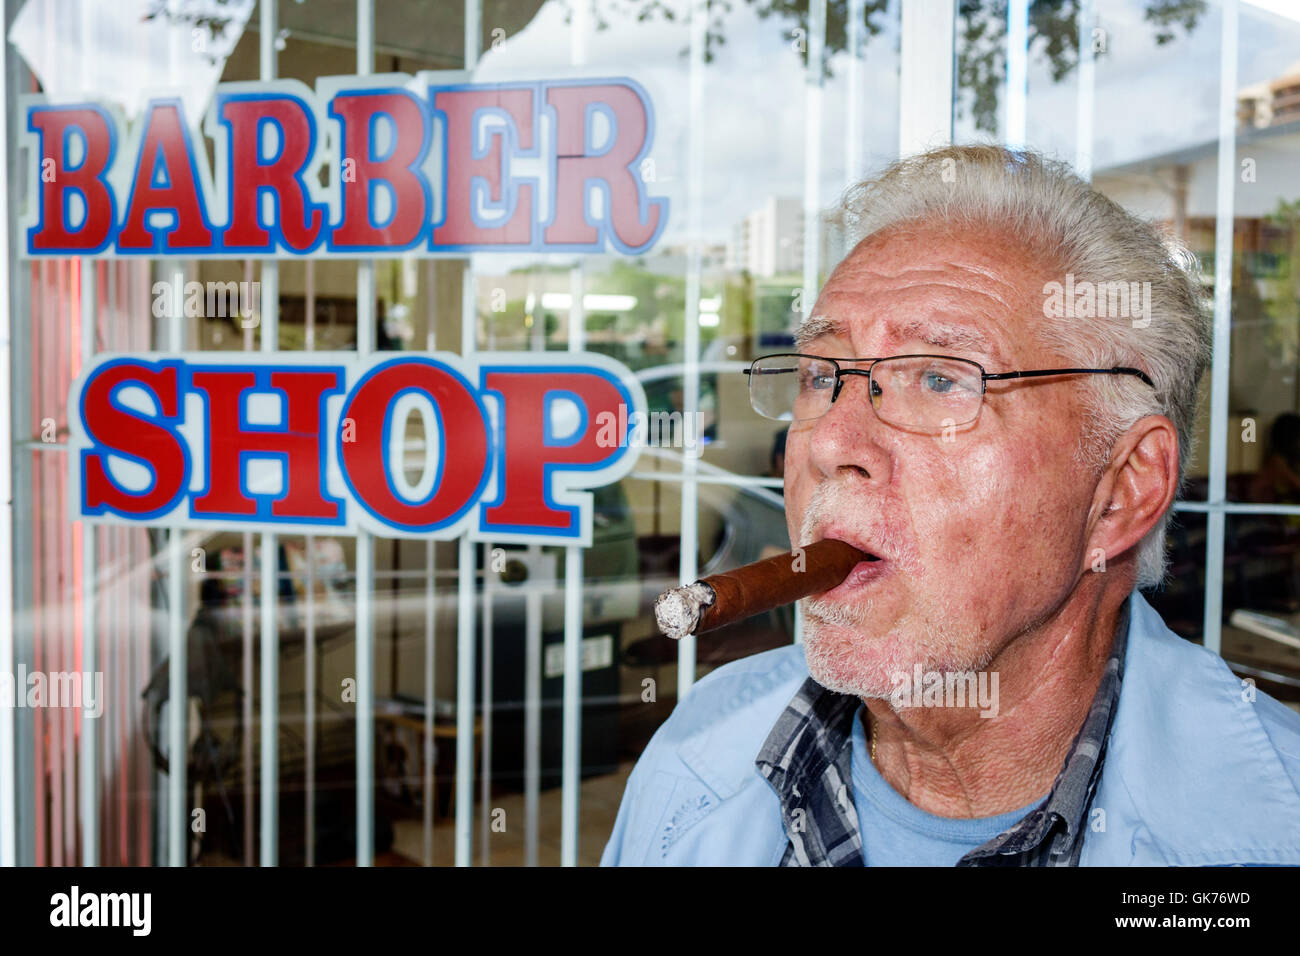 Miami Florida,Coral Way,barber shop,exterior,sign,small business,personal grooming,Hispanic adult,adults,man men male,mature,barber,smoking,cigar,gray Stock Photo